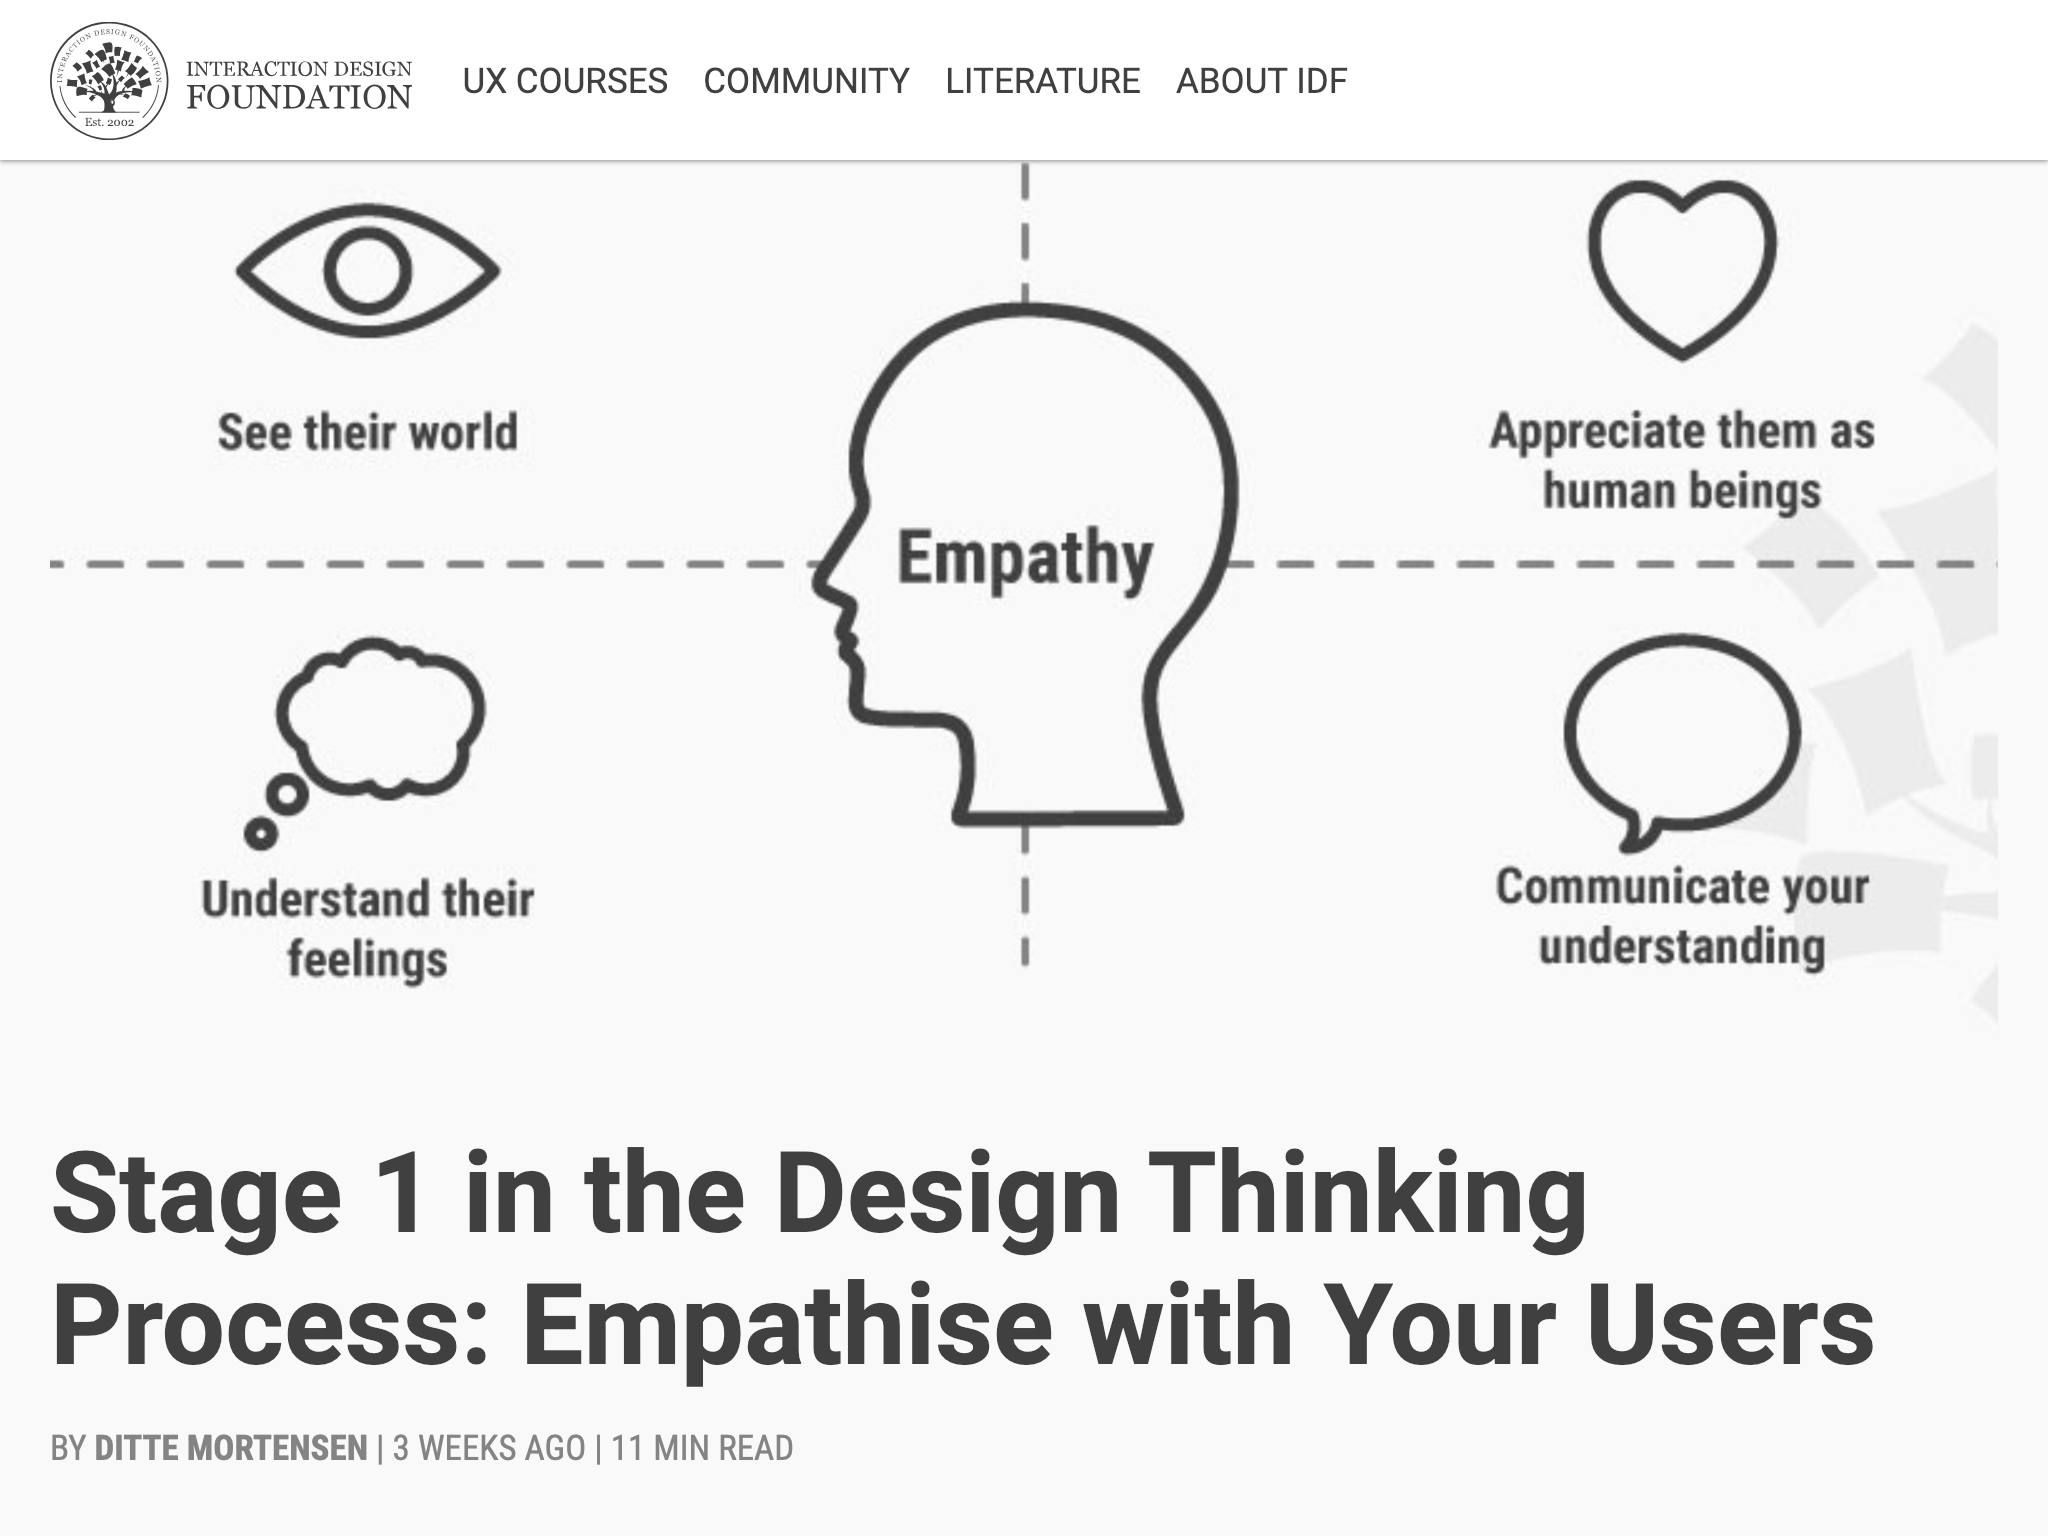 Design Thinking starts with empathy.